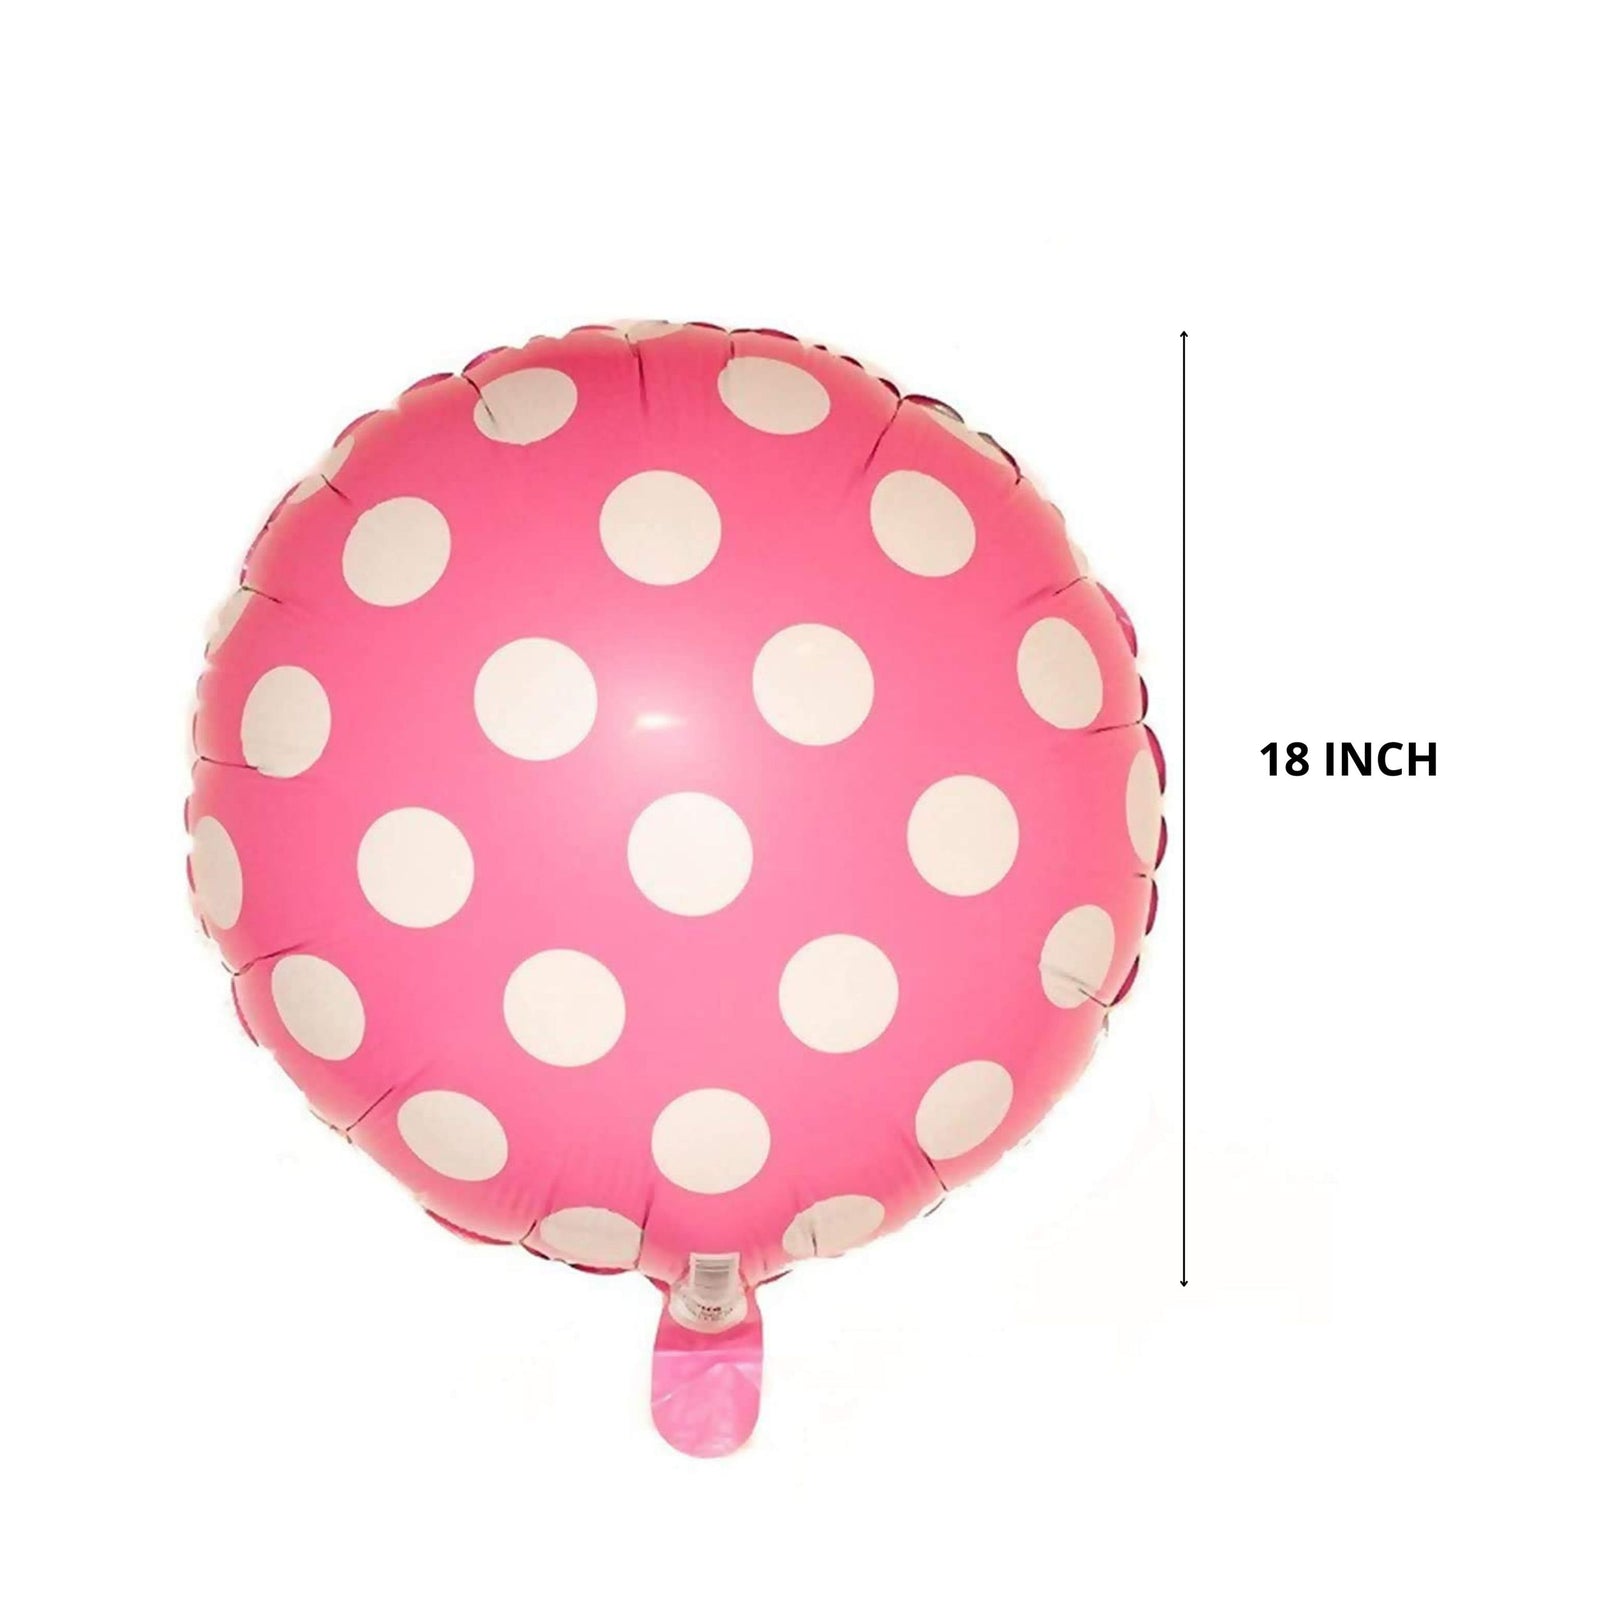 Round Shape Pink Polka Dot Foil Balloon